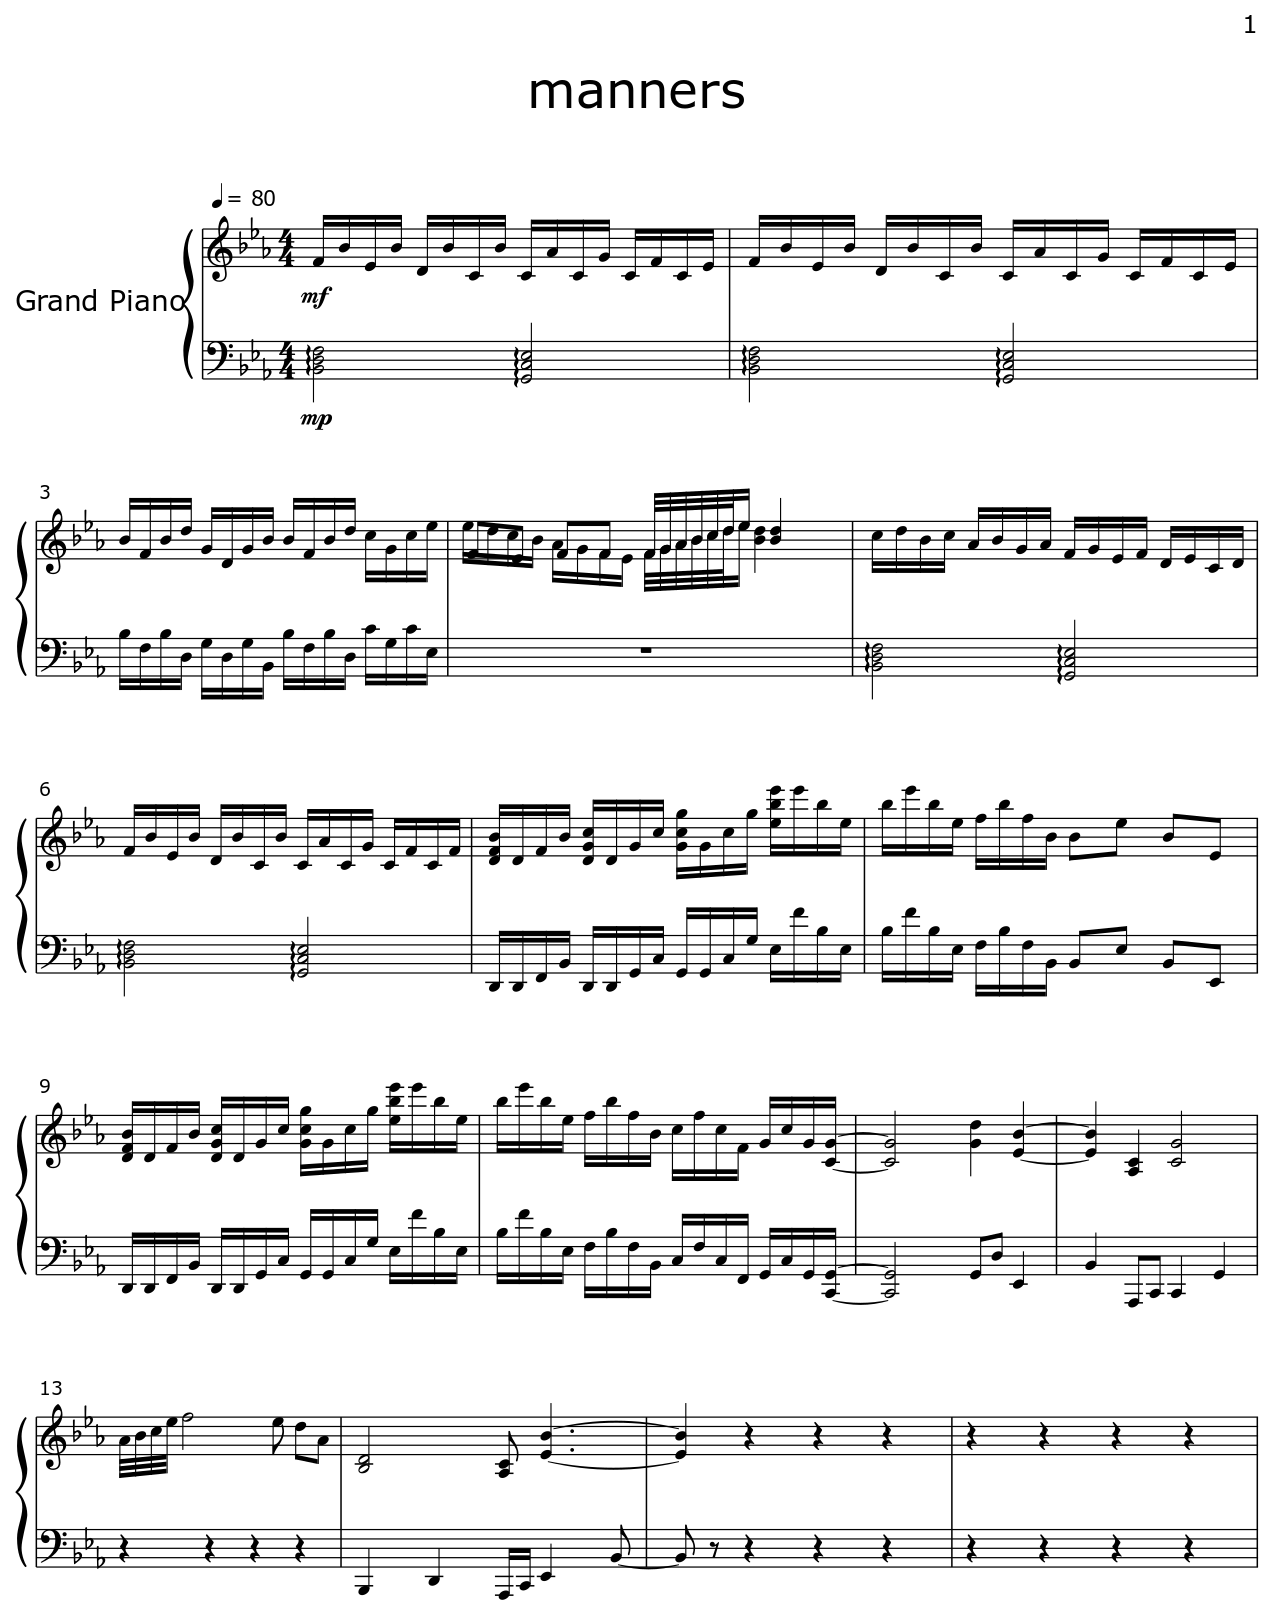 manners - Sheet music for String Ensemble